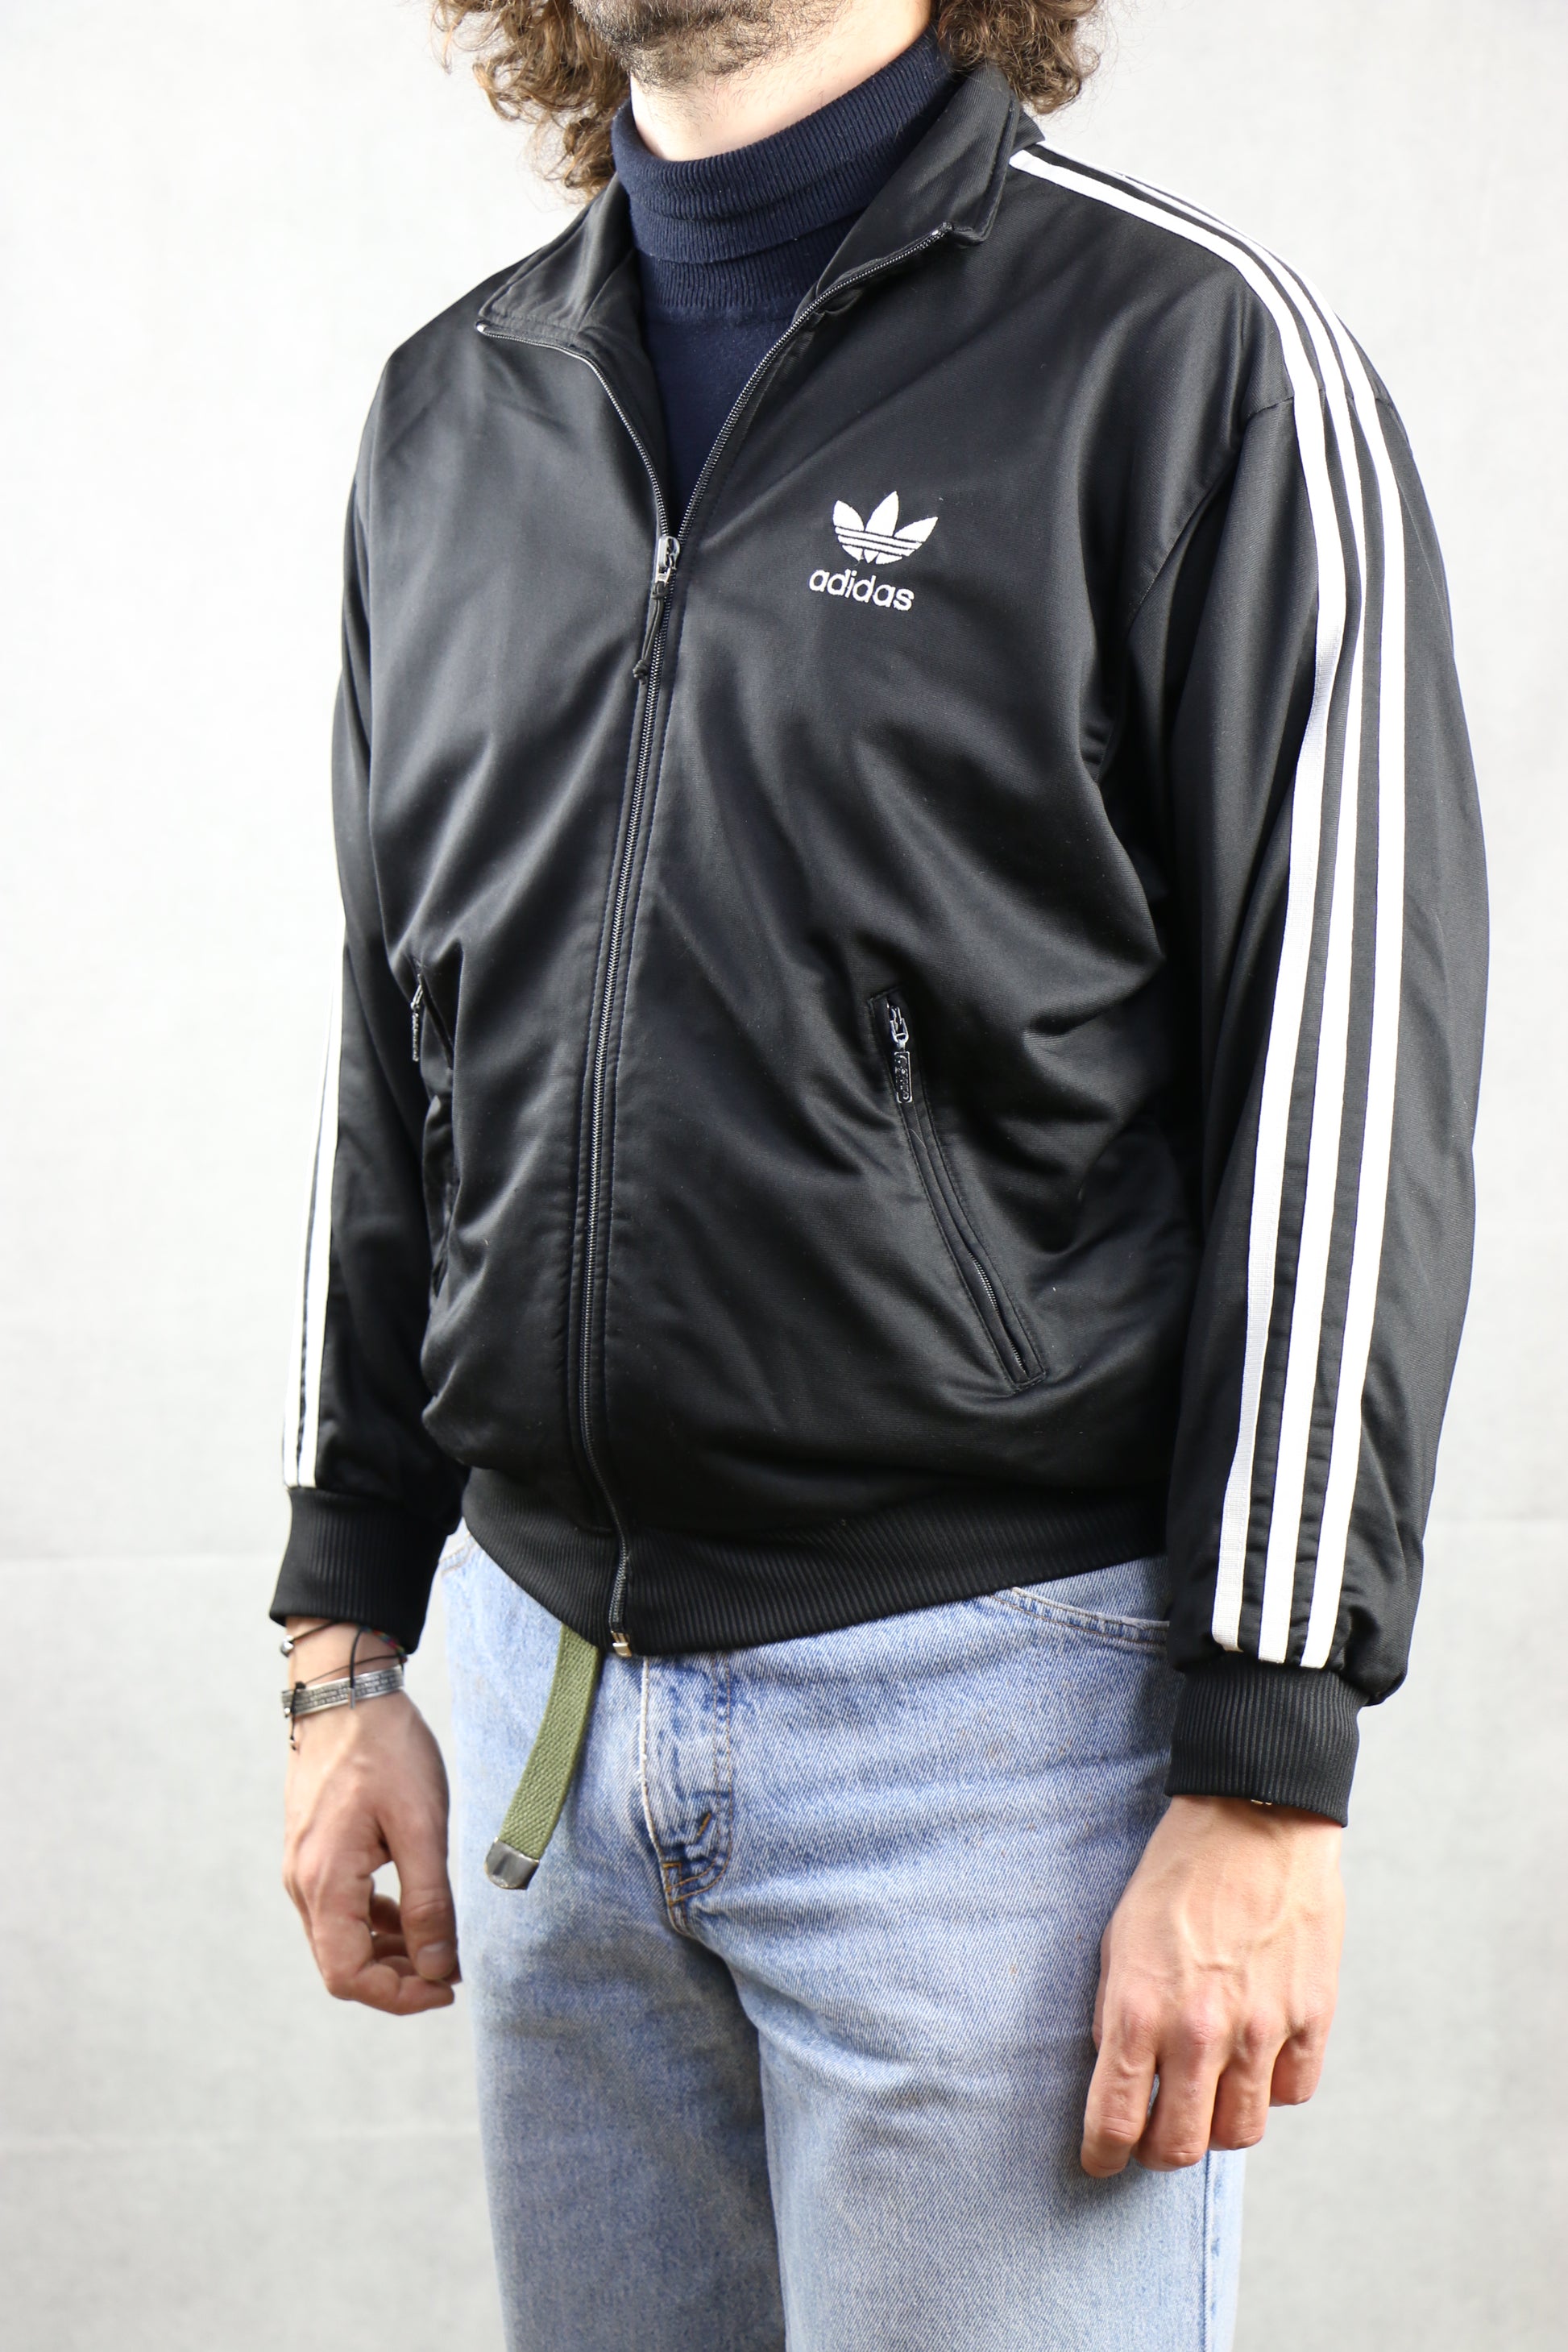 Adidas Track Jacket Classic Black - vintage clothing clochard92.com